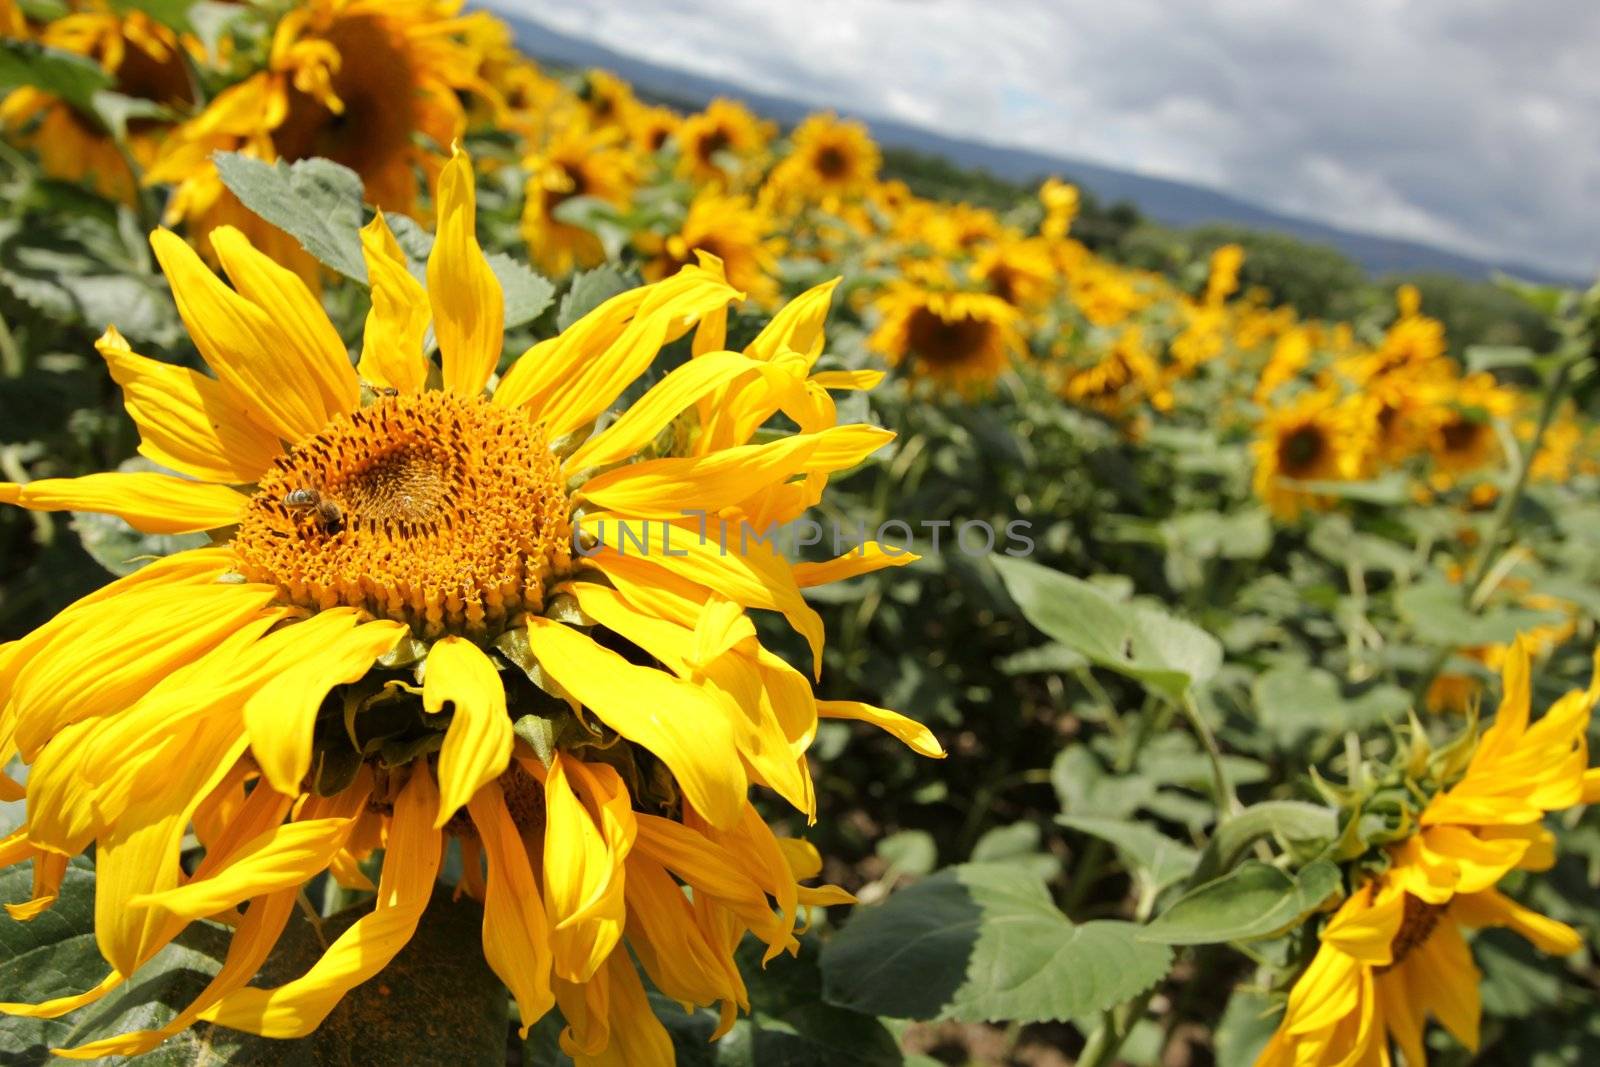 Bee on a sunflower by Elenaphotos21